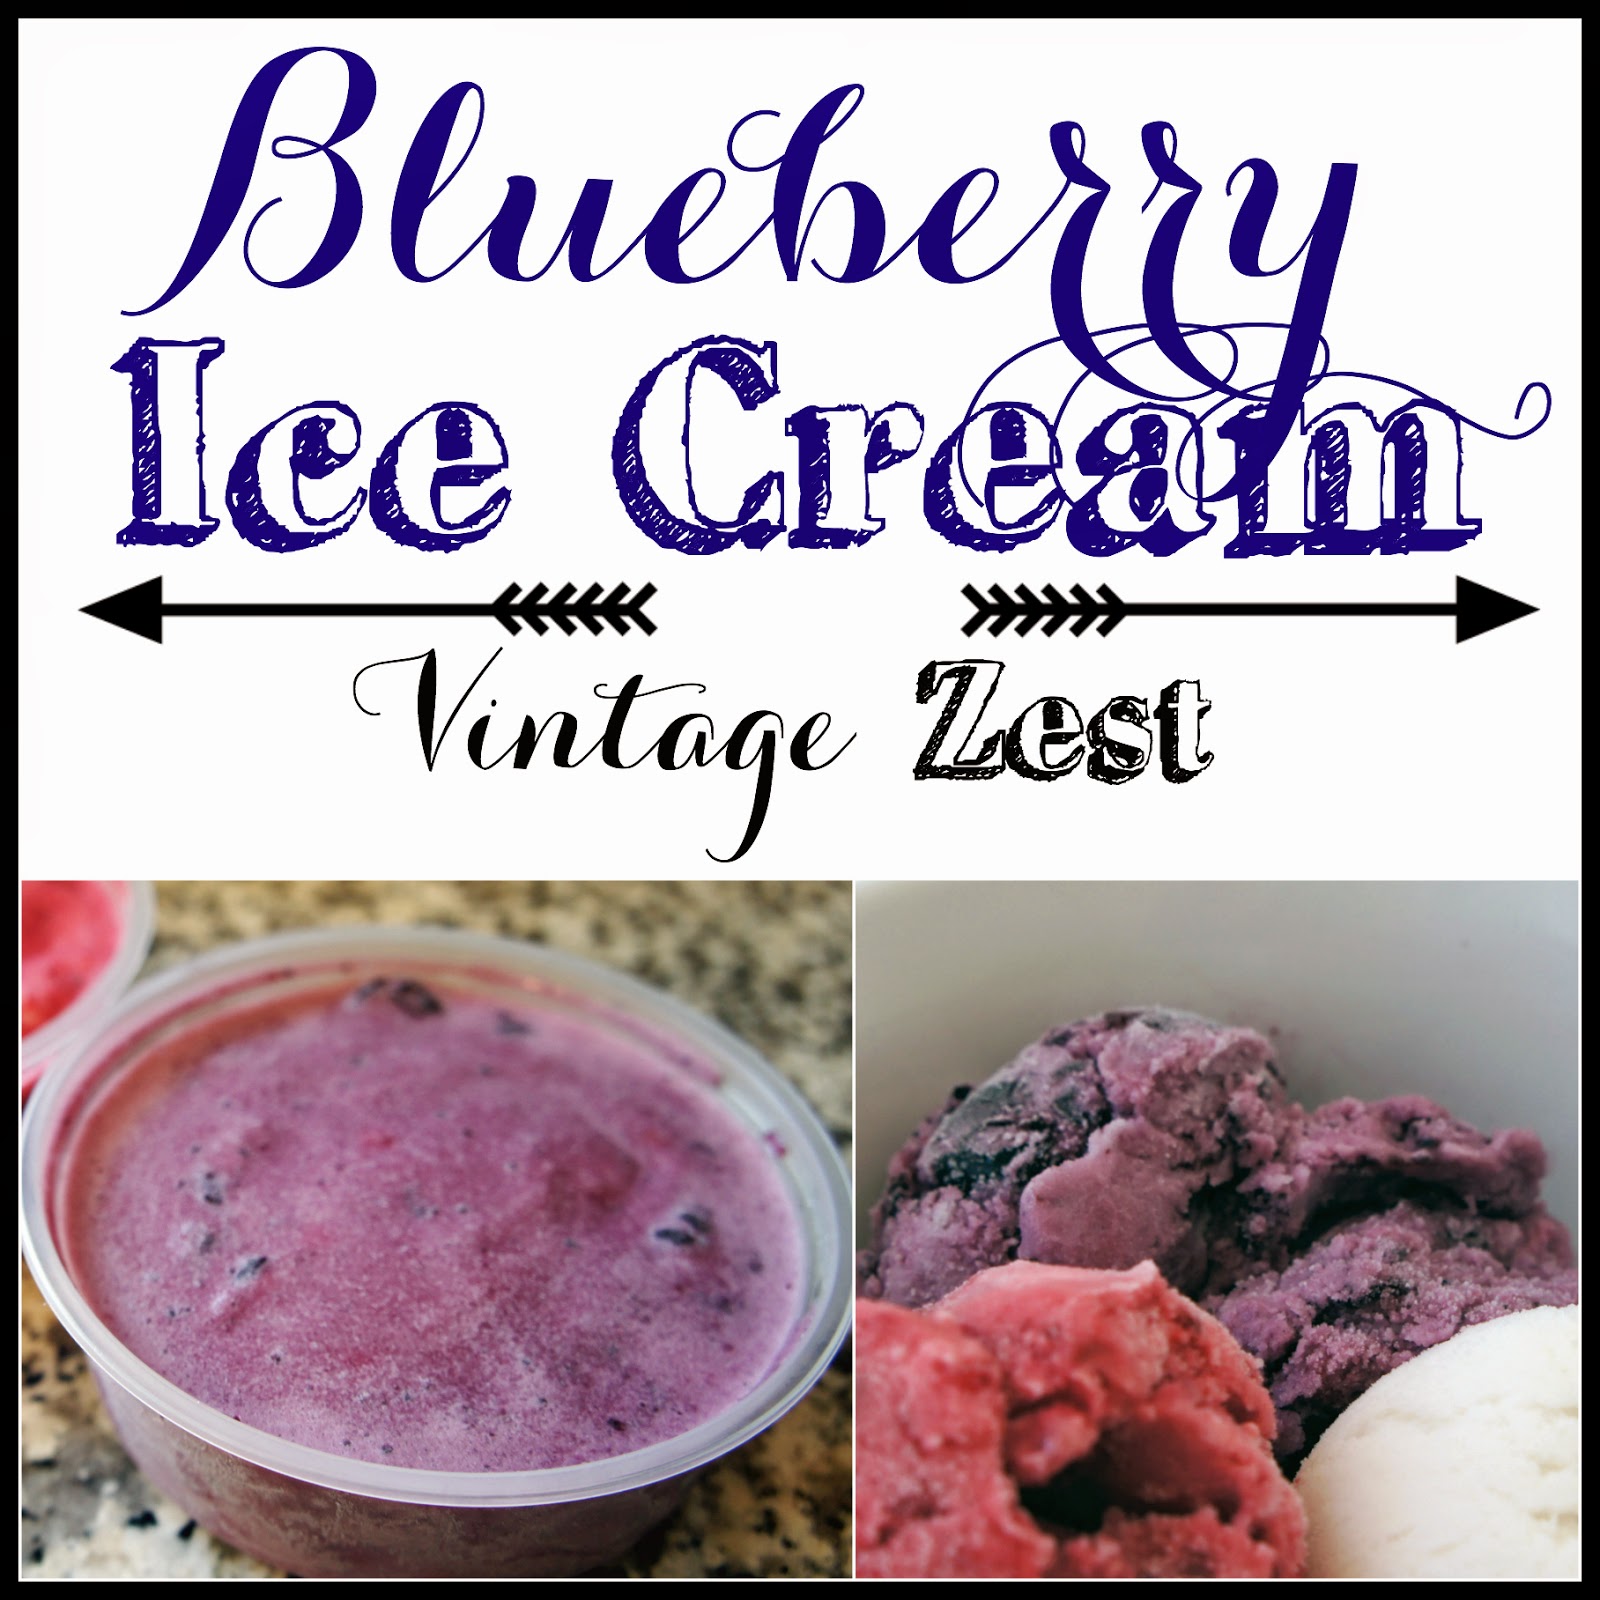 15 Blueberry Recipes on Diane's Vintage Zest!